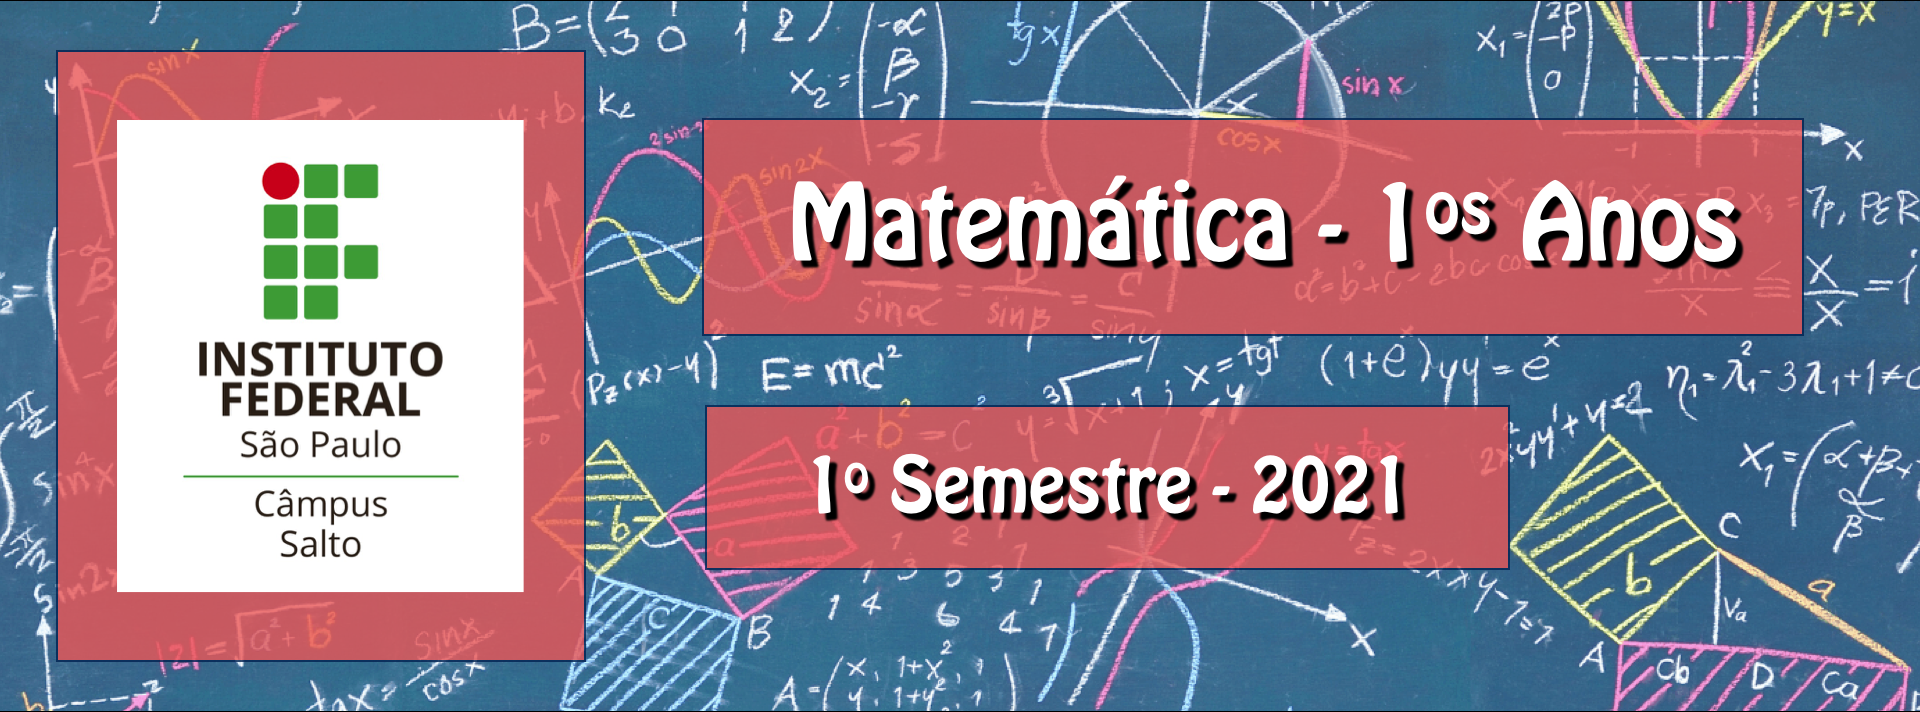 Matemática - 1os Anos - 2021